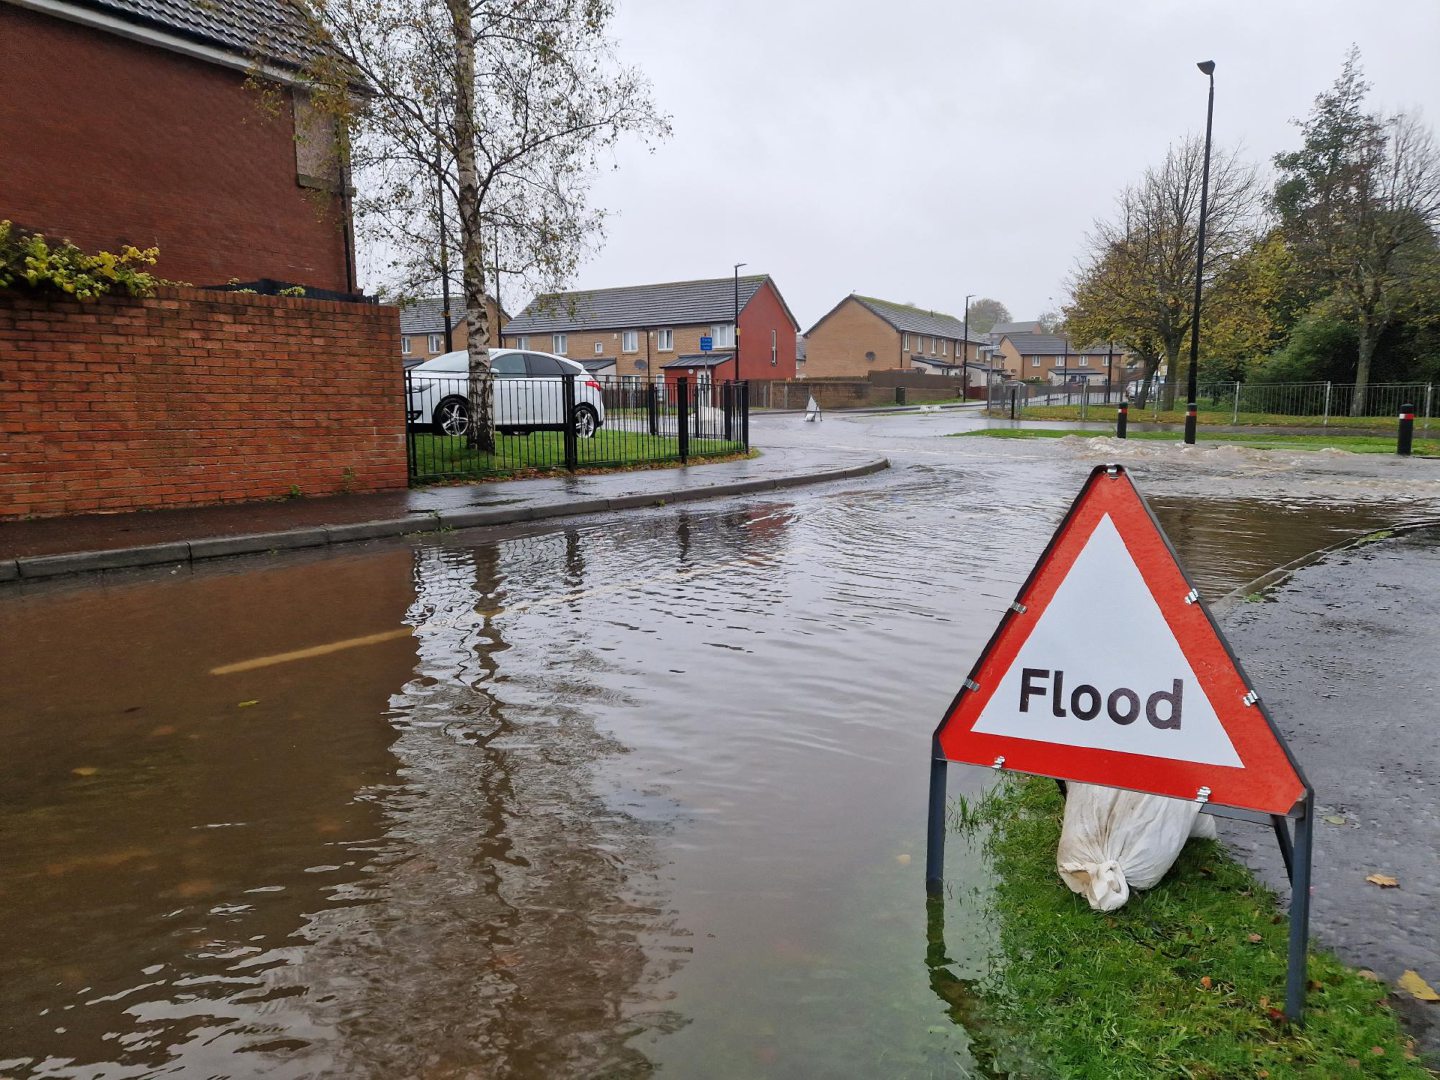 'Flood' sign on a street in Ardler during Storm Babet.